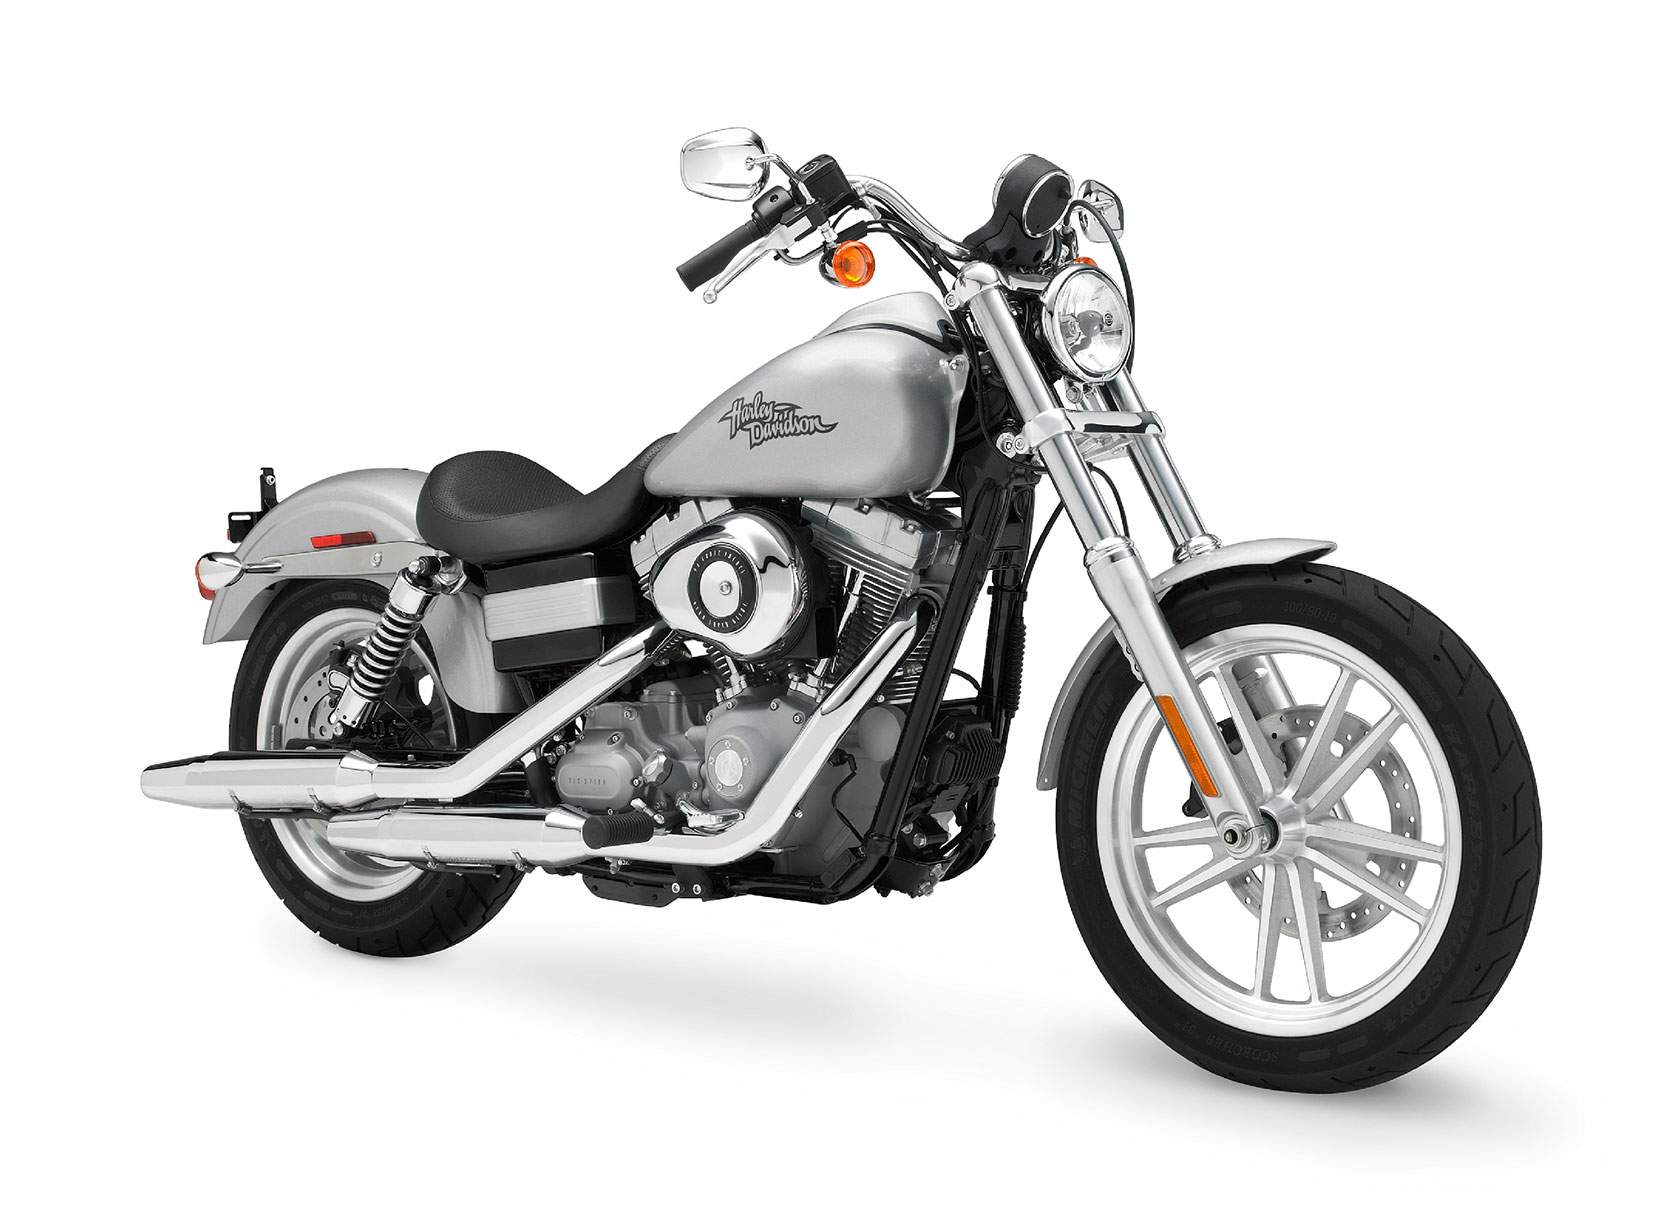 Especificaciones técnicas de Harley-Davidson Harley Davidson FXD Dyna Super Glide (2010-11)